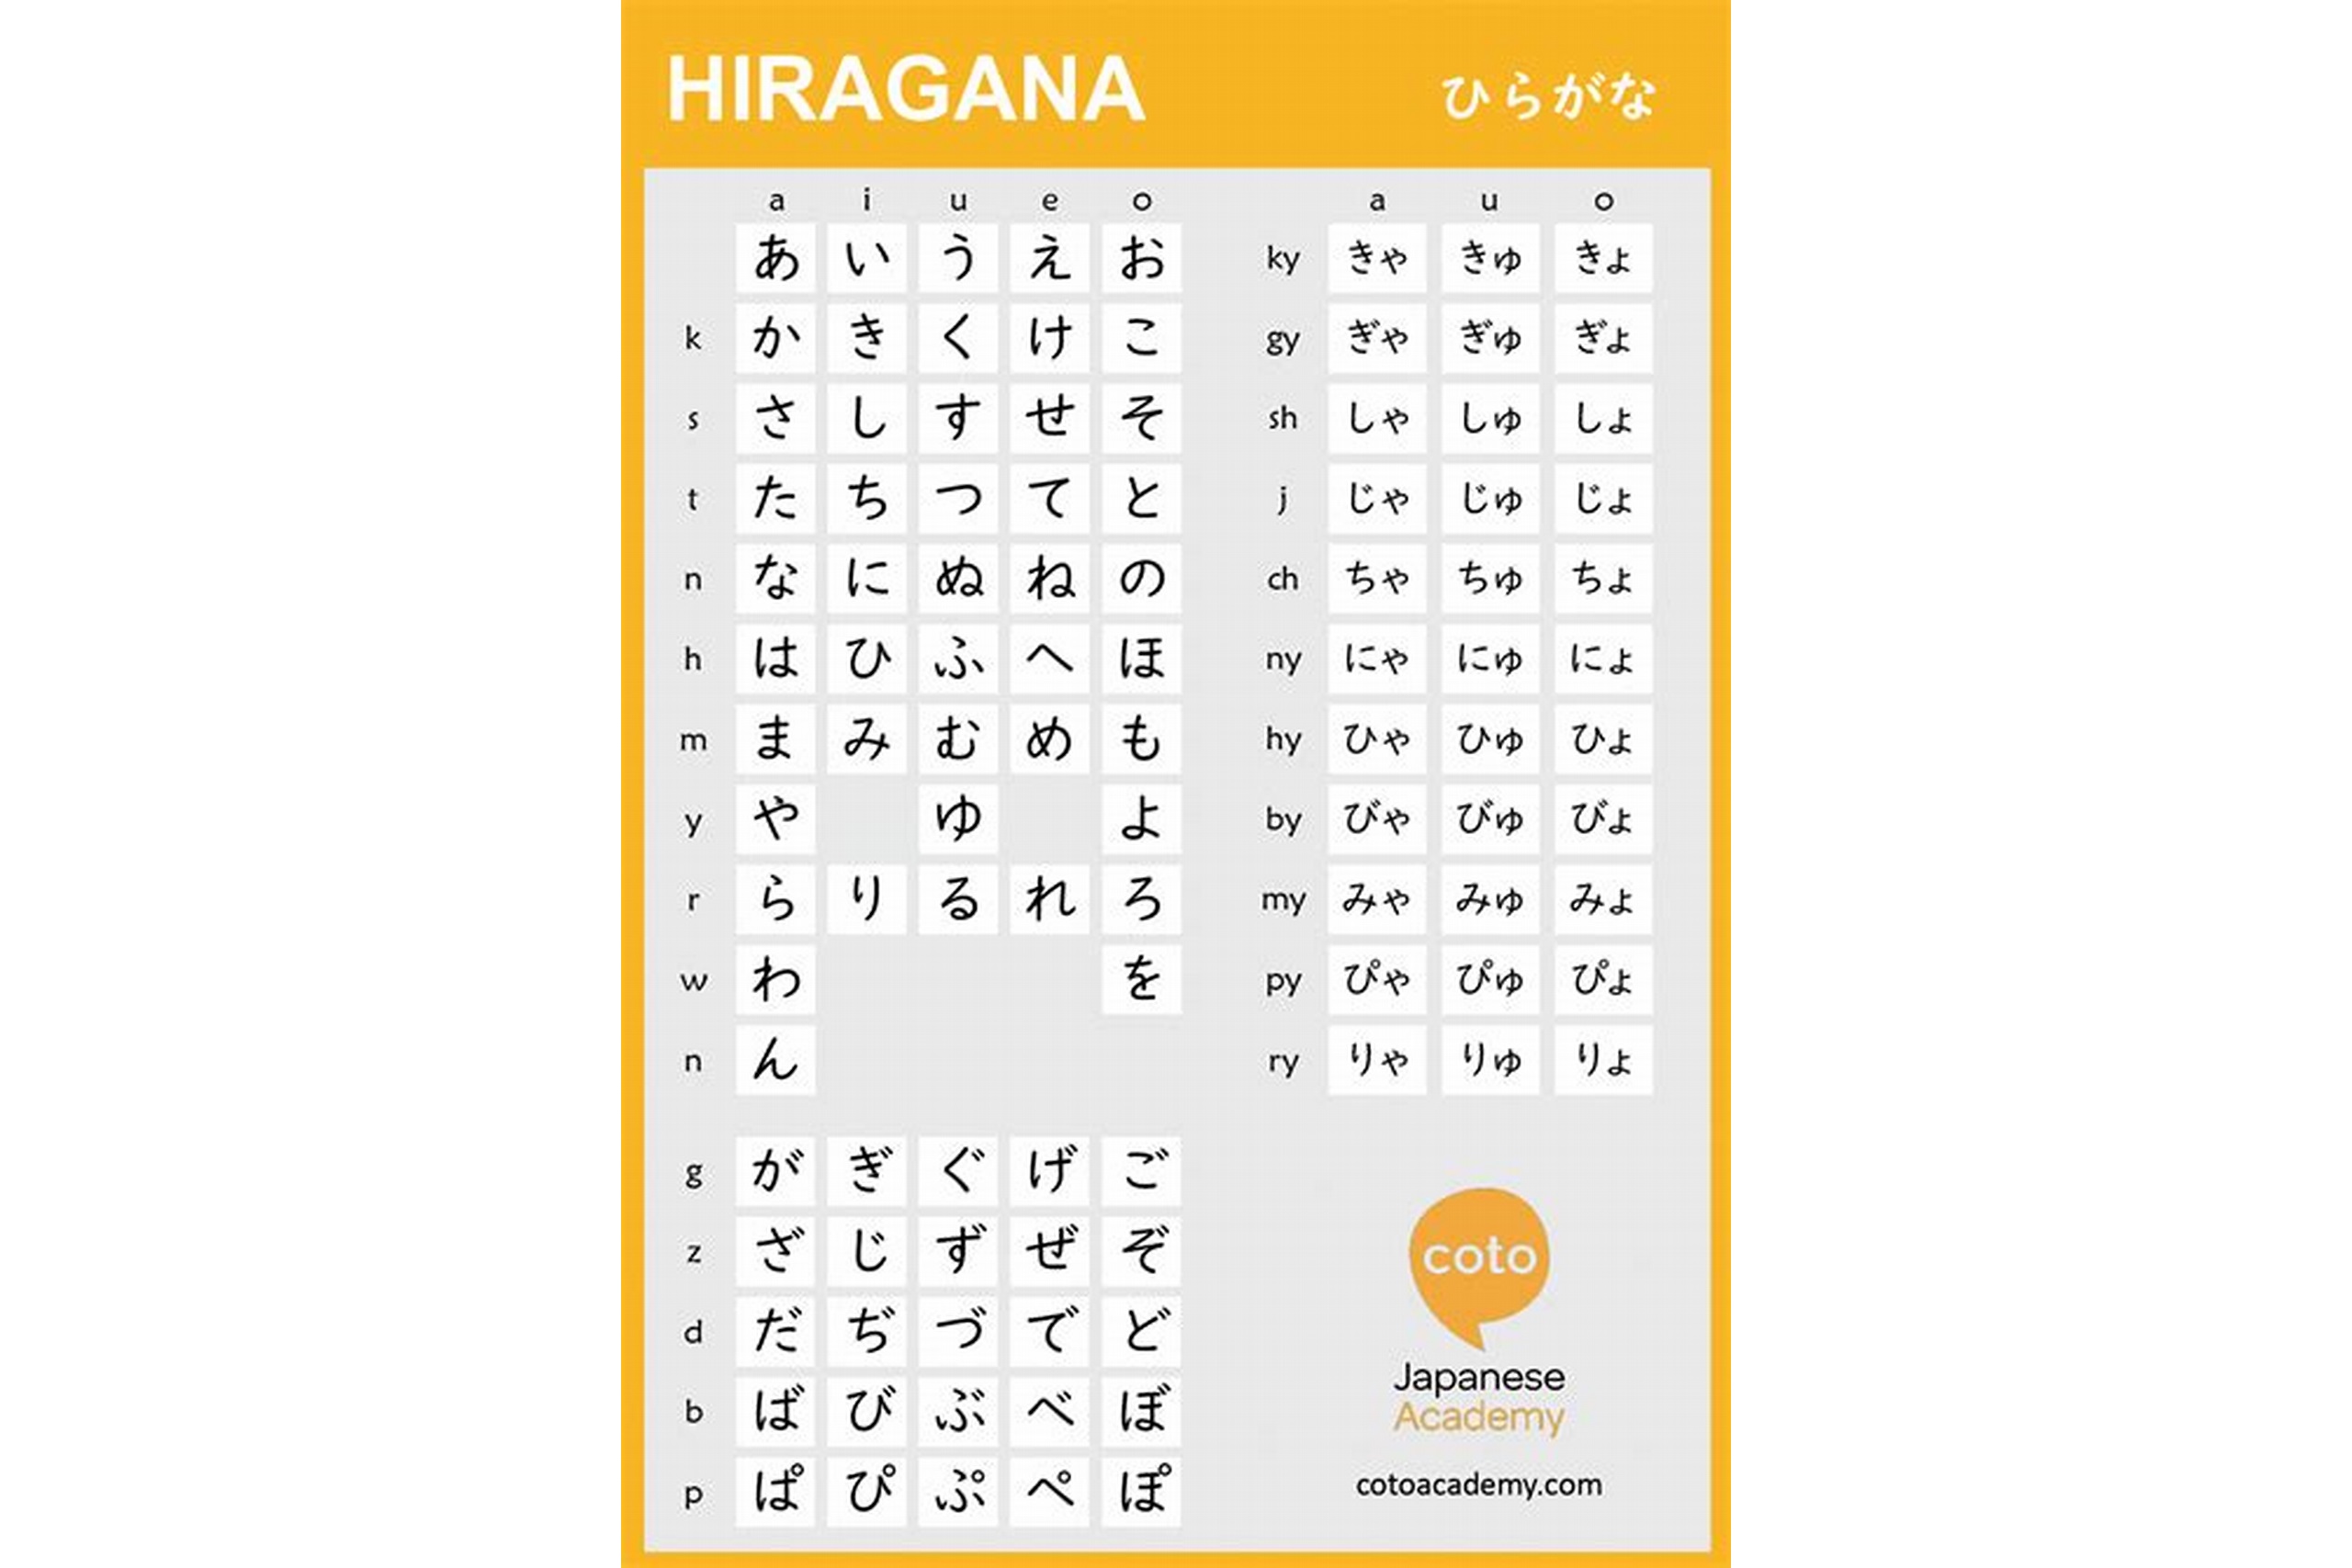 hiragana test in indonesia